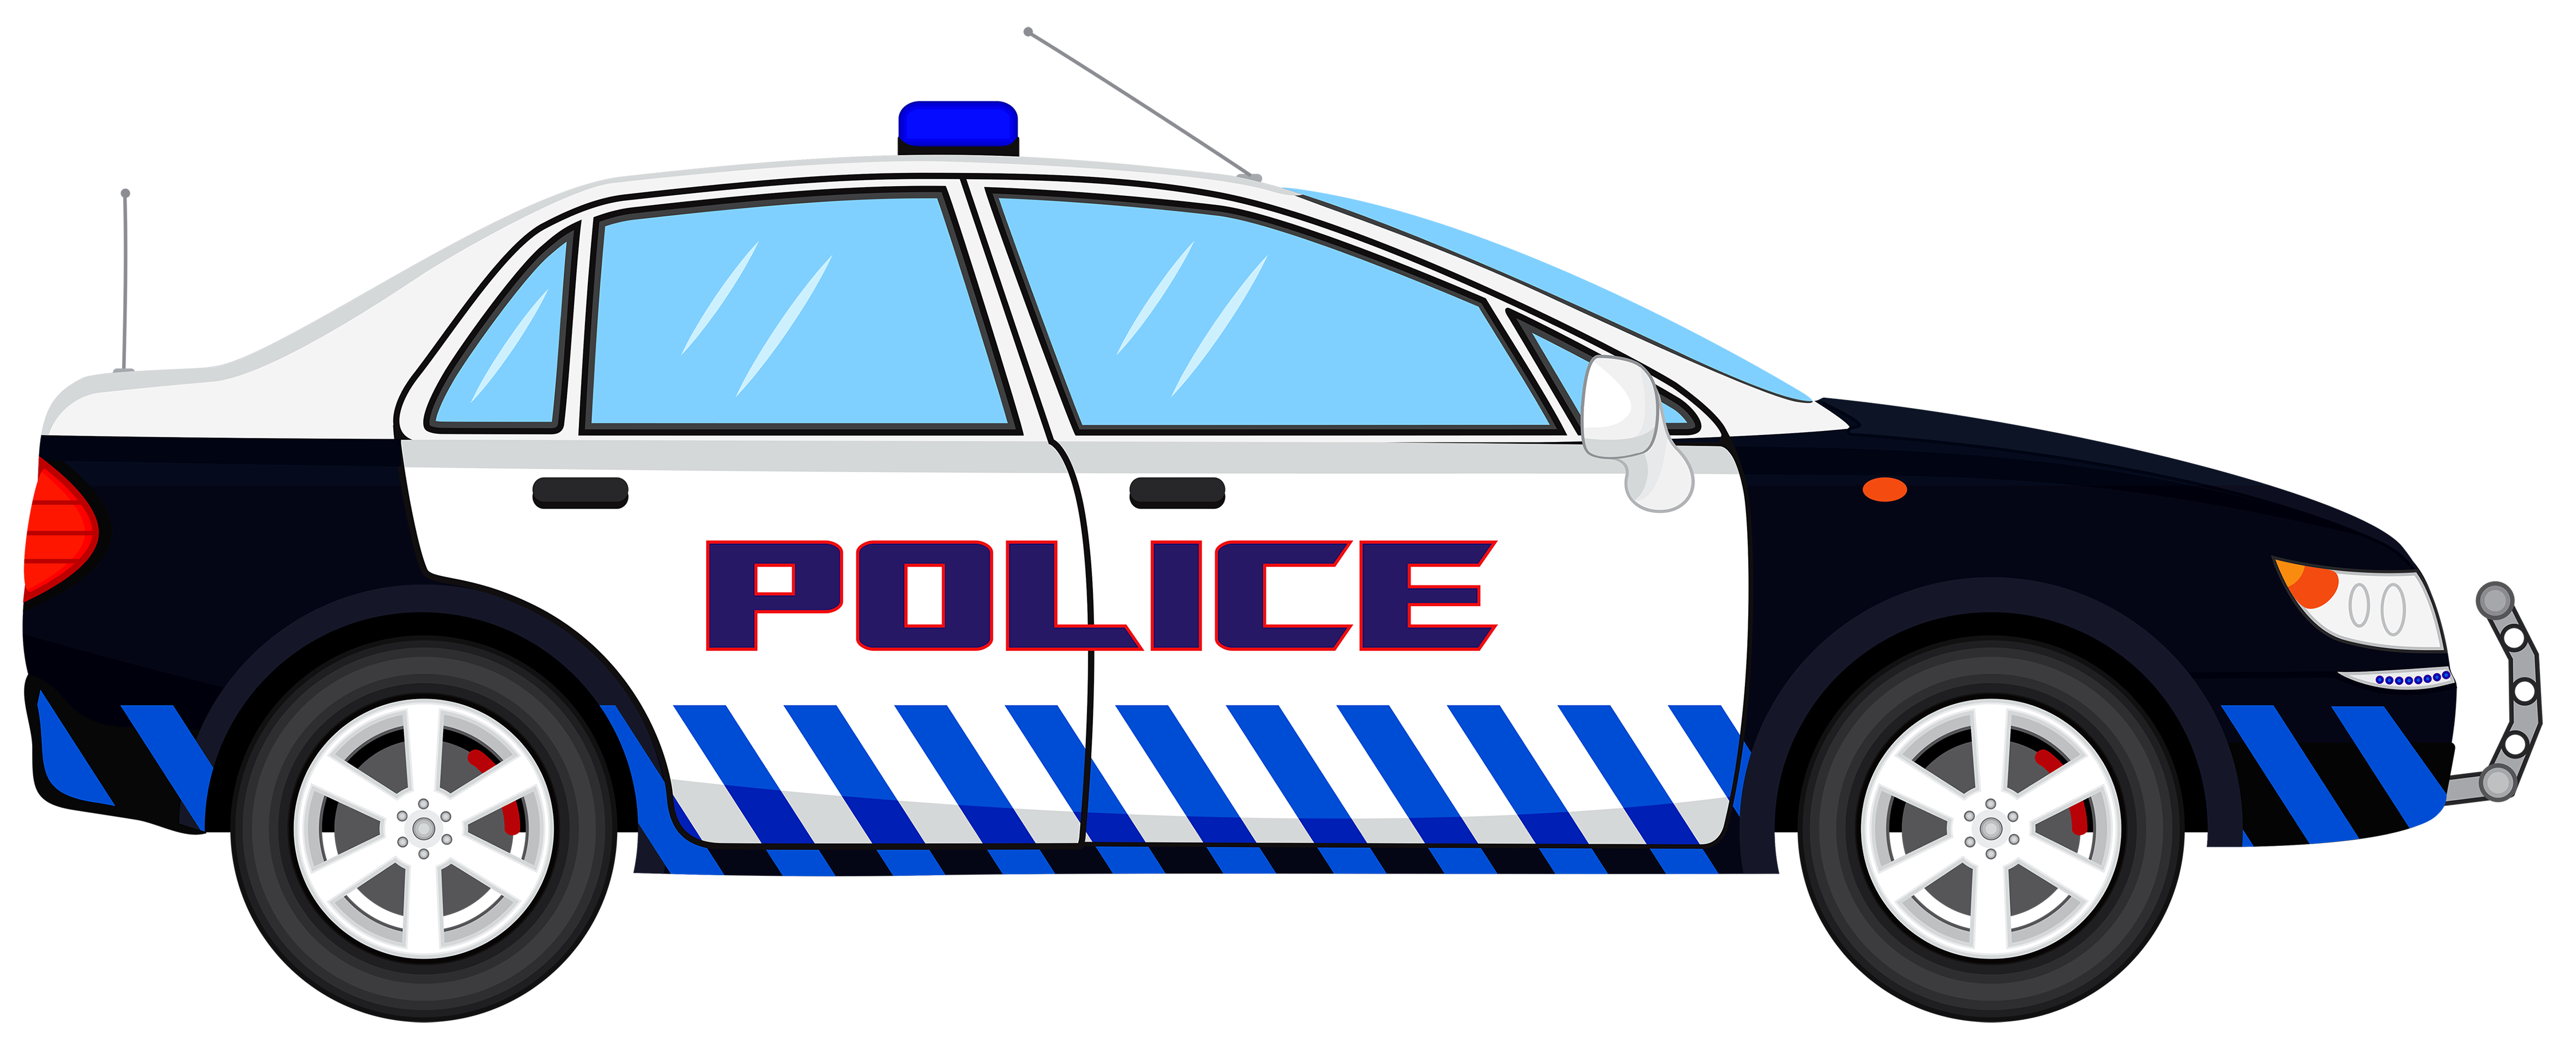 Police car Clip art - Police Car Transparent PNG Clip Art Image png